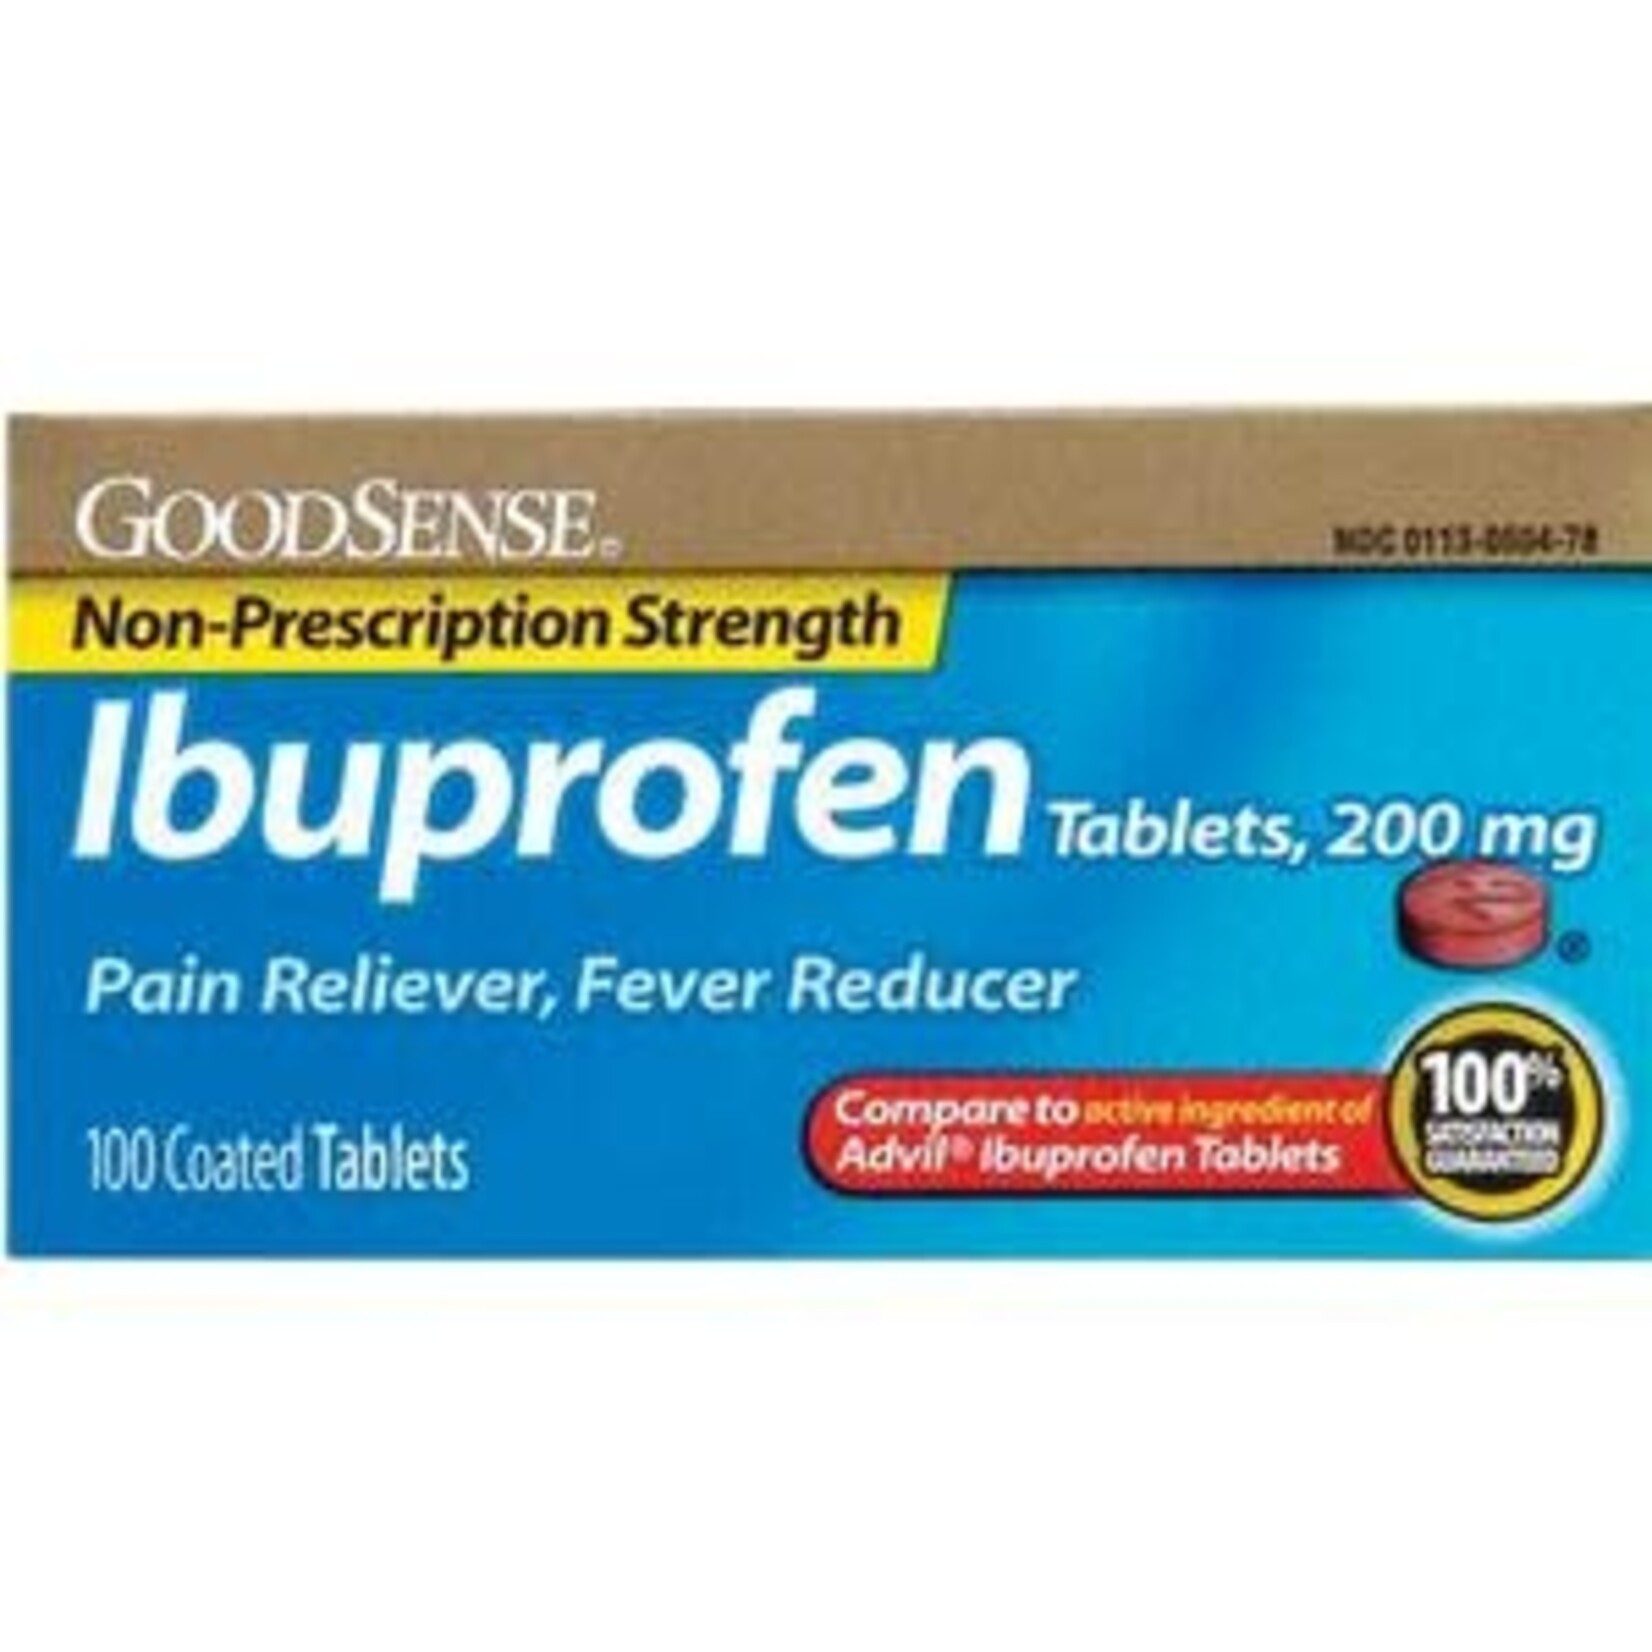 Goodsense GoodSense® 200mg Ibuprofen Tablet 100 Count, Non-Prescription Strength